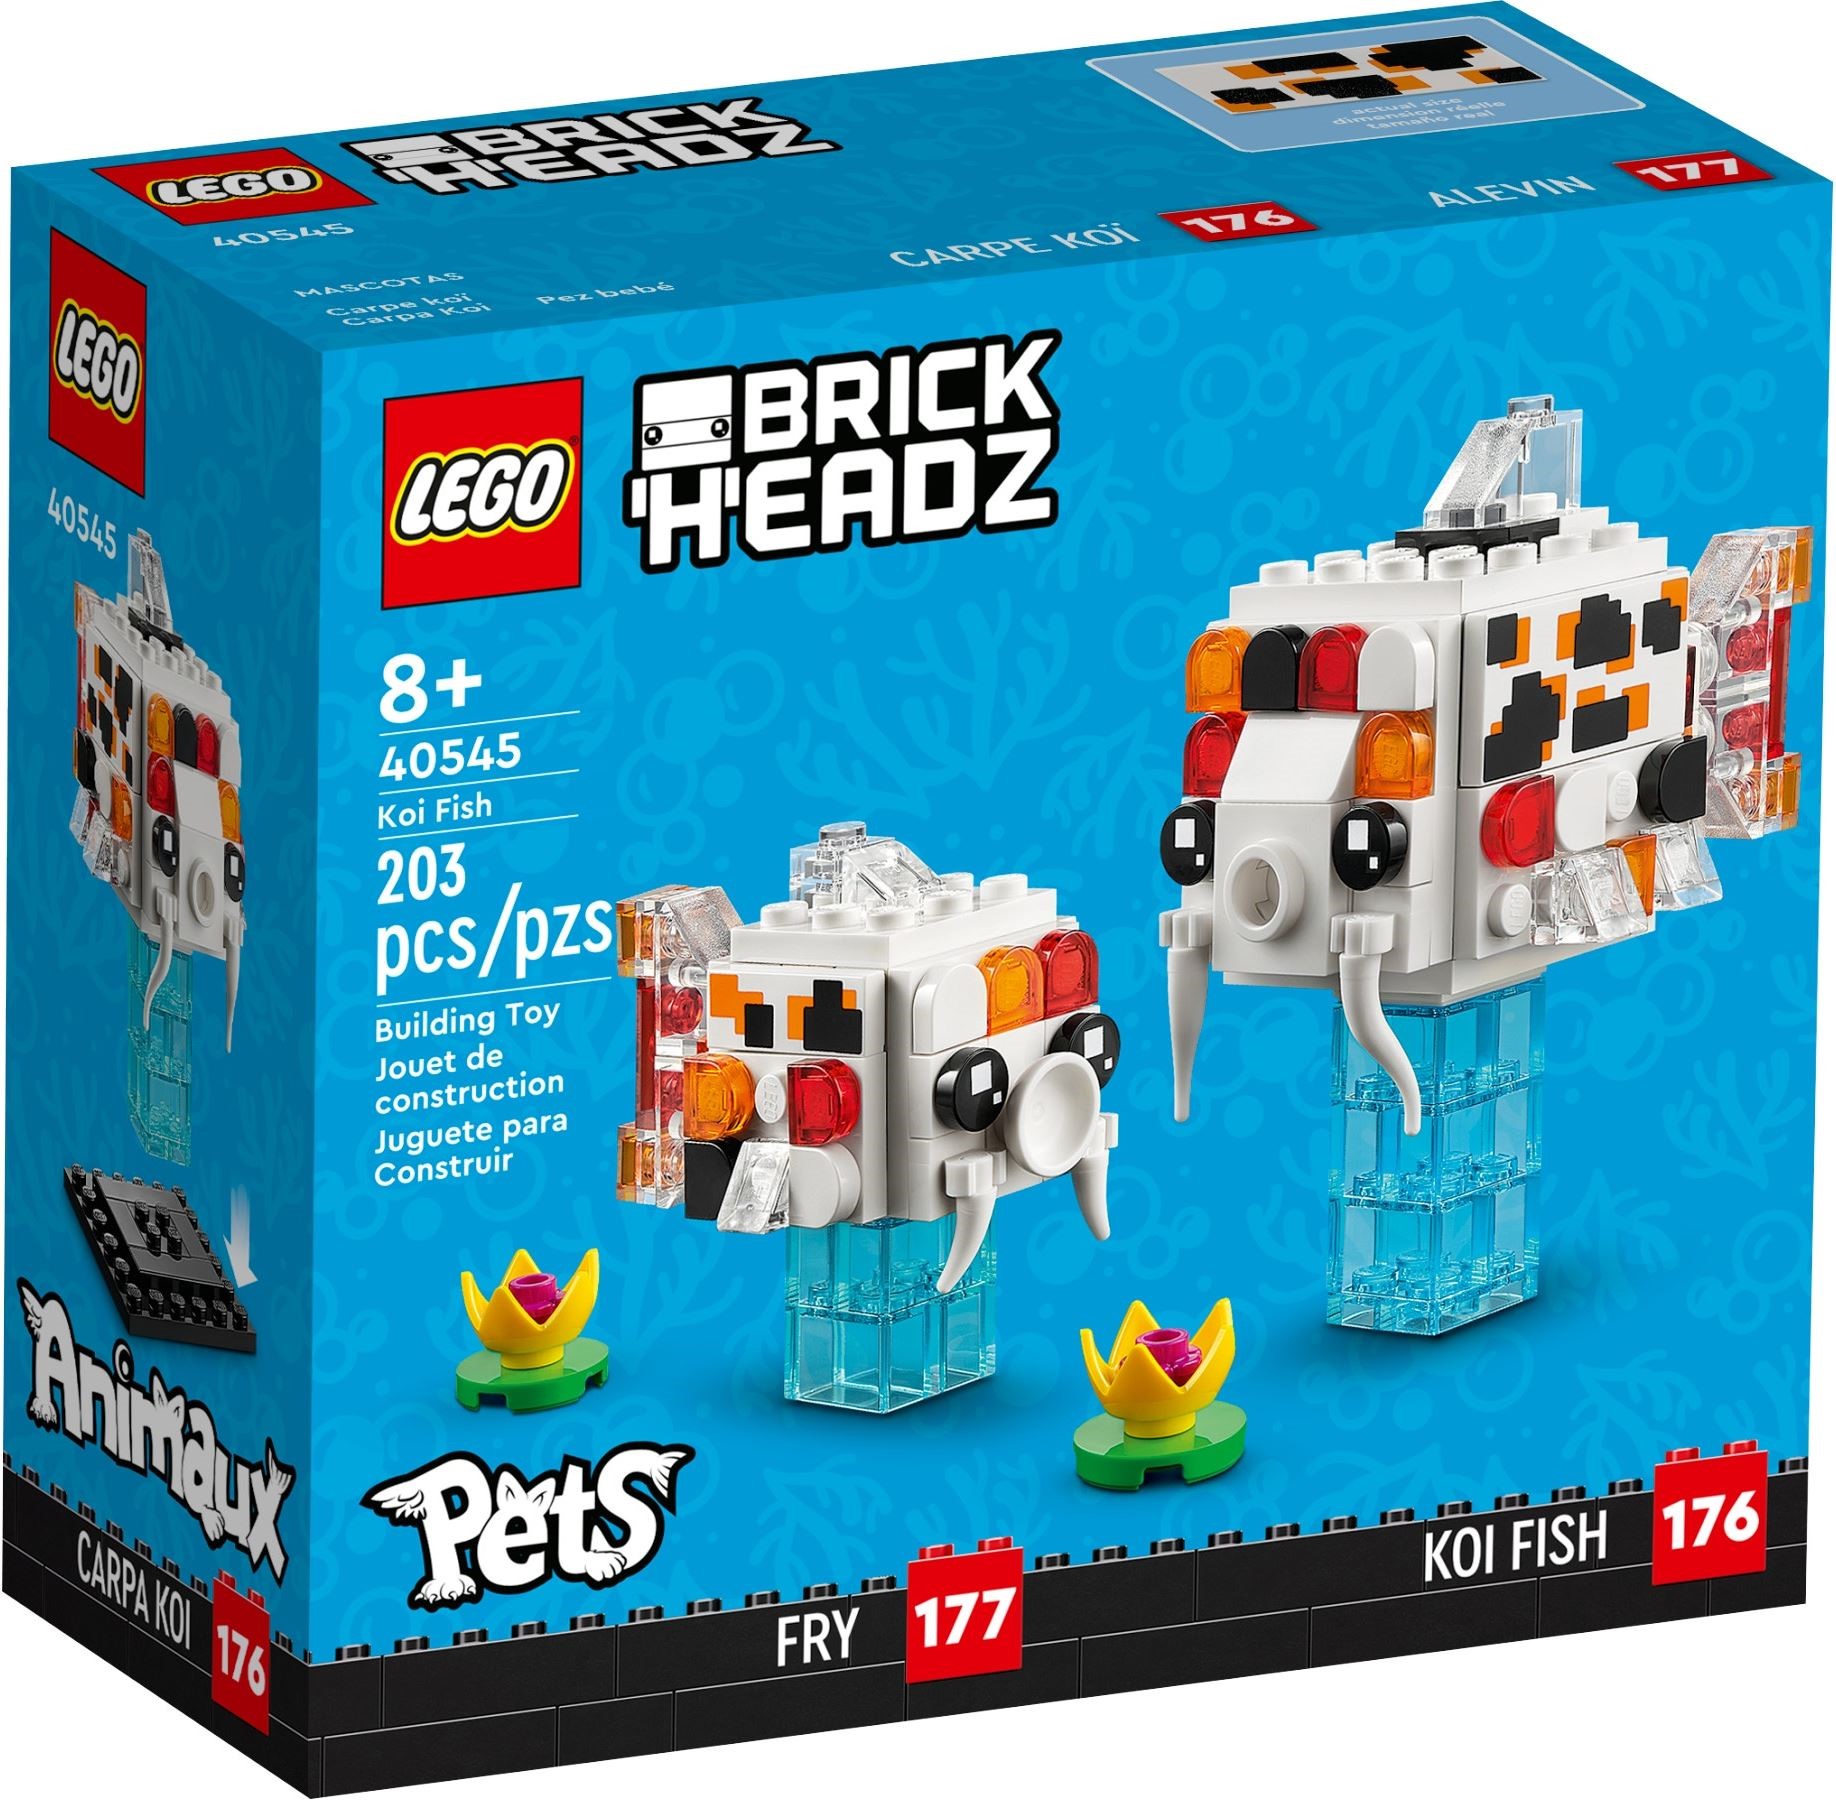 Lego 40545 Koi Fish - Lego Brickheadz set for sale best price